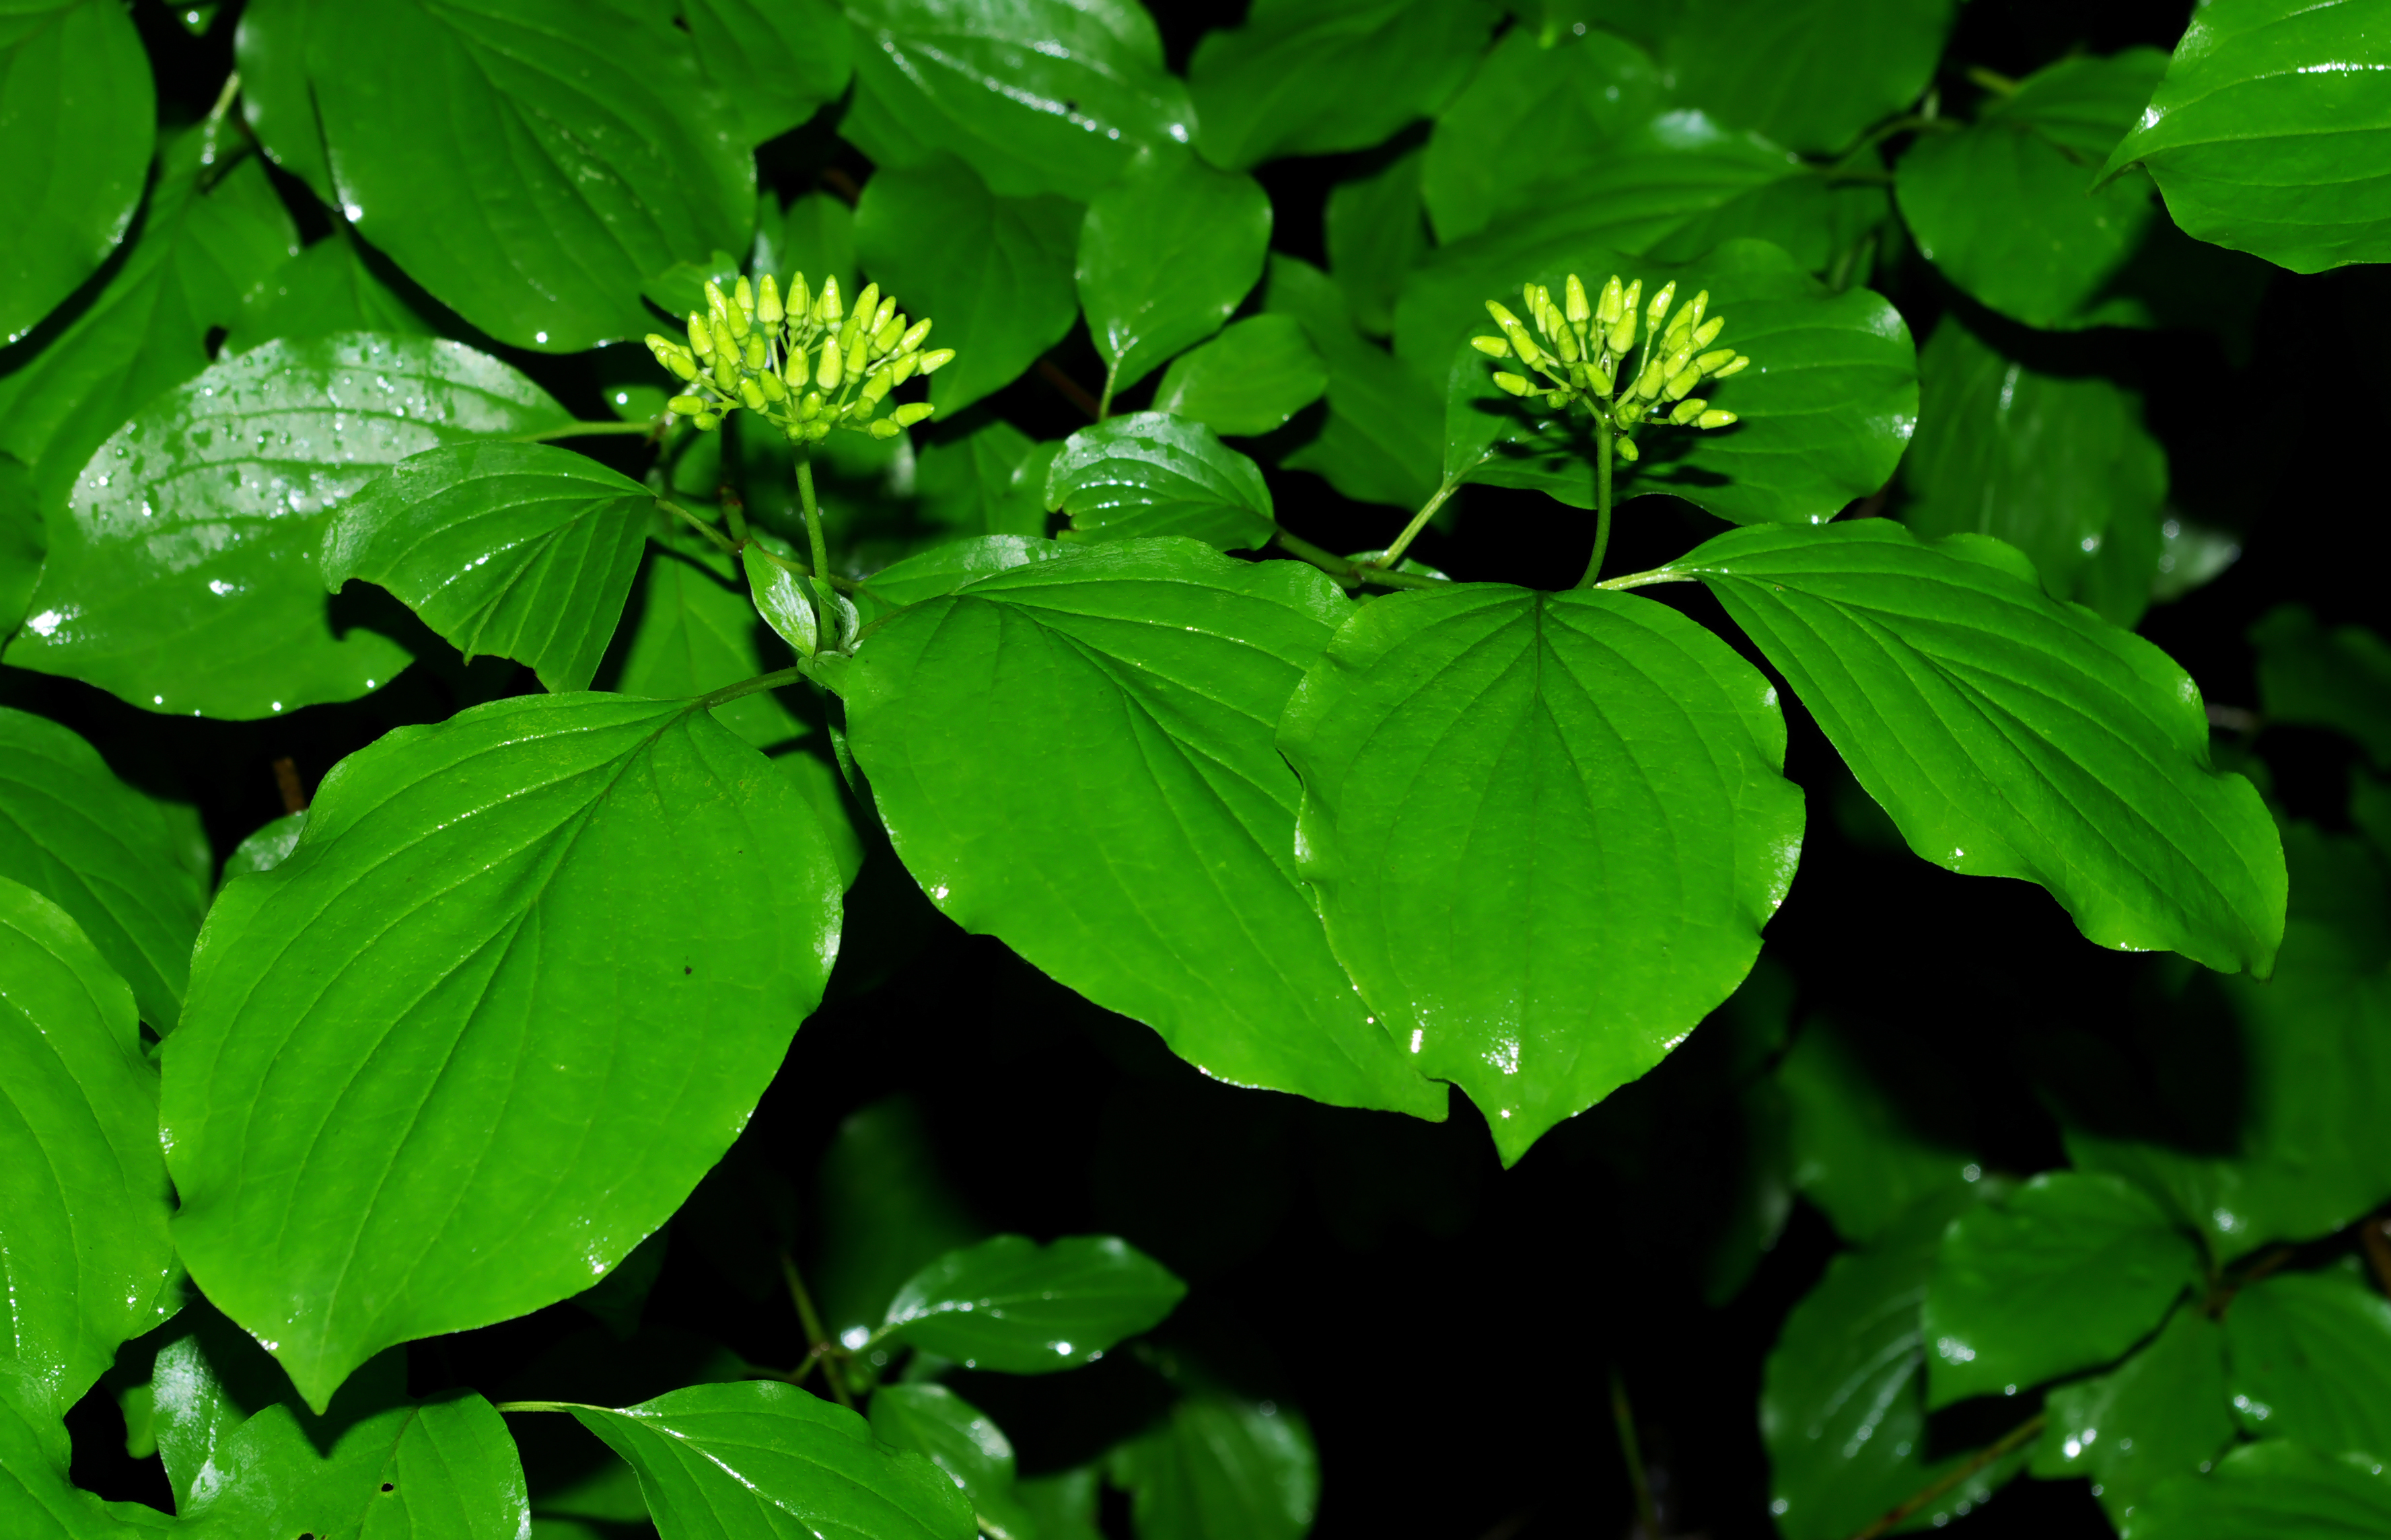 File:Cornus sanguinea - flowers and leaves.jpg - Wikimedia Commons